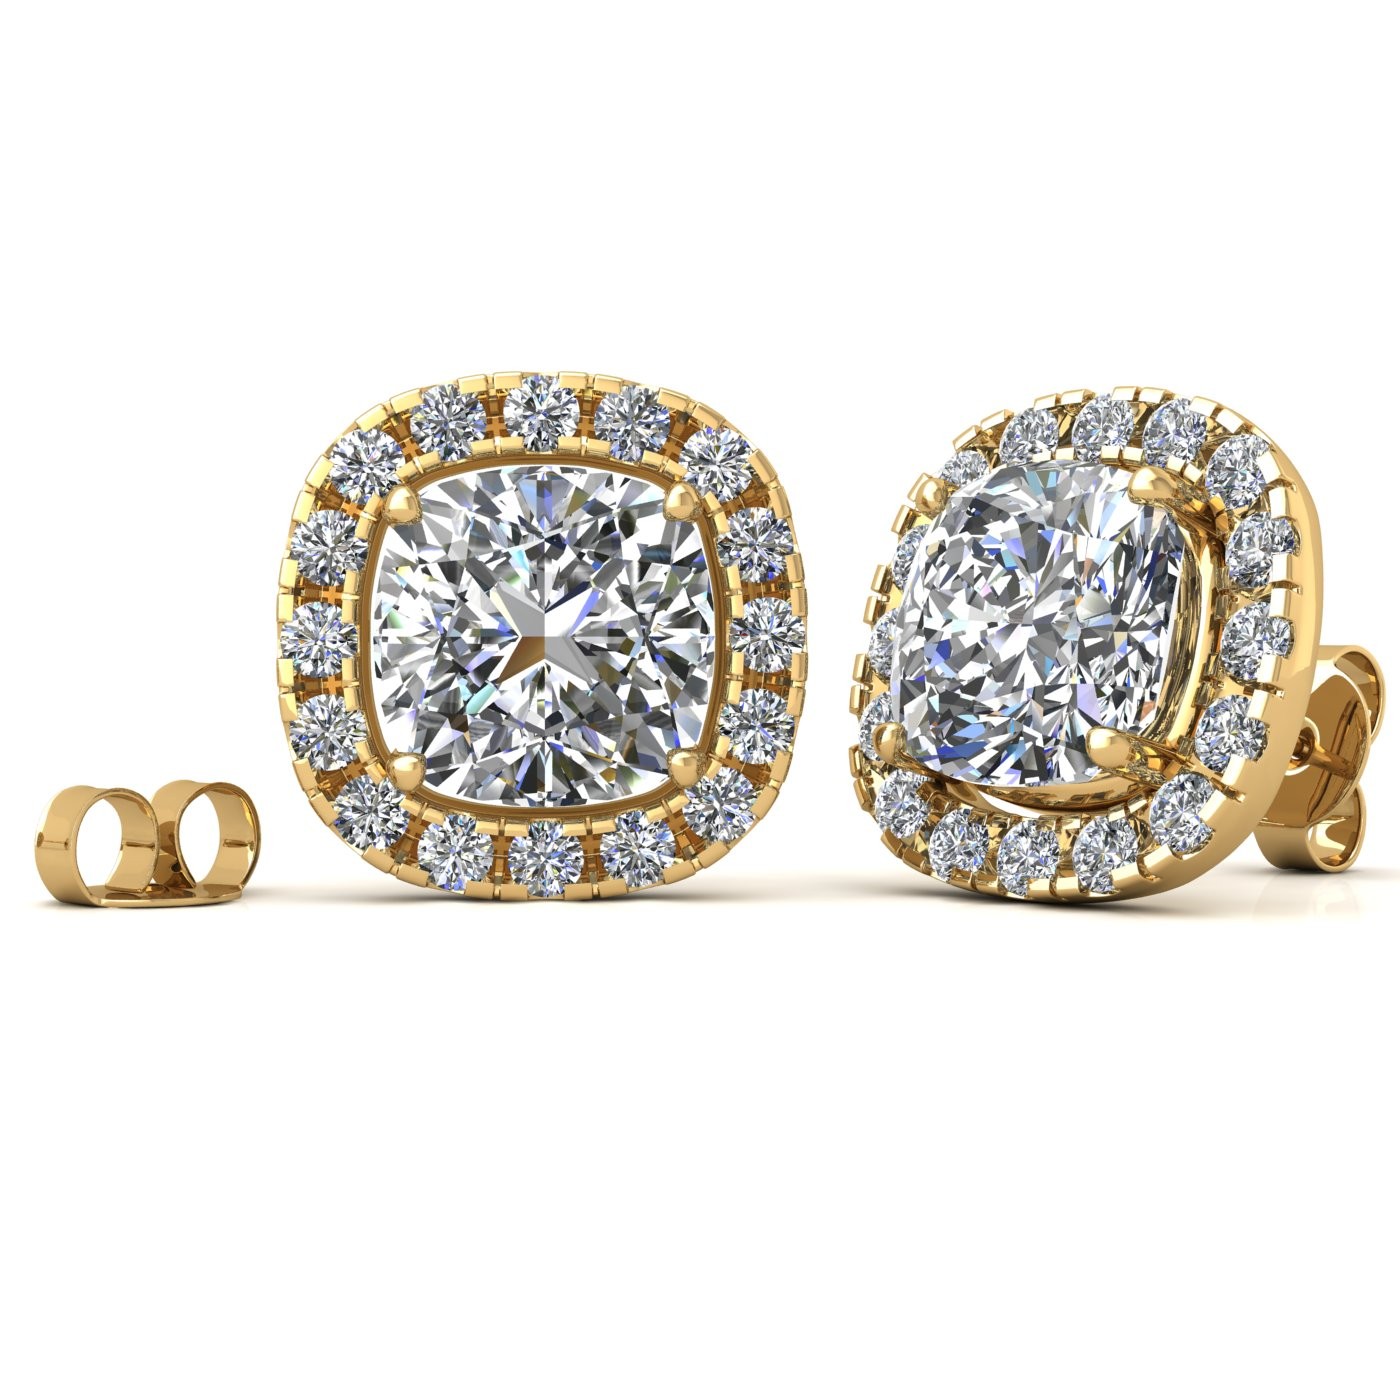 18k yellow gold  1,5 ct each (3,0 tcw) 4 prongs cushion shape diamond earrings with diamond pavÉ set halo Photos & images